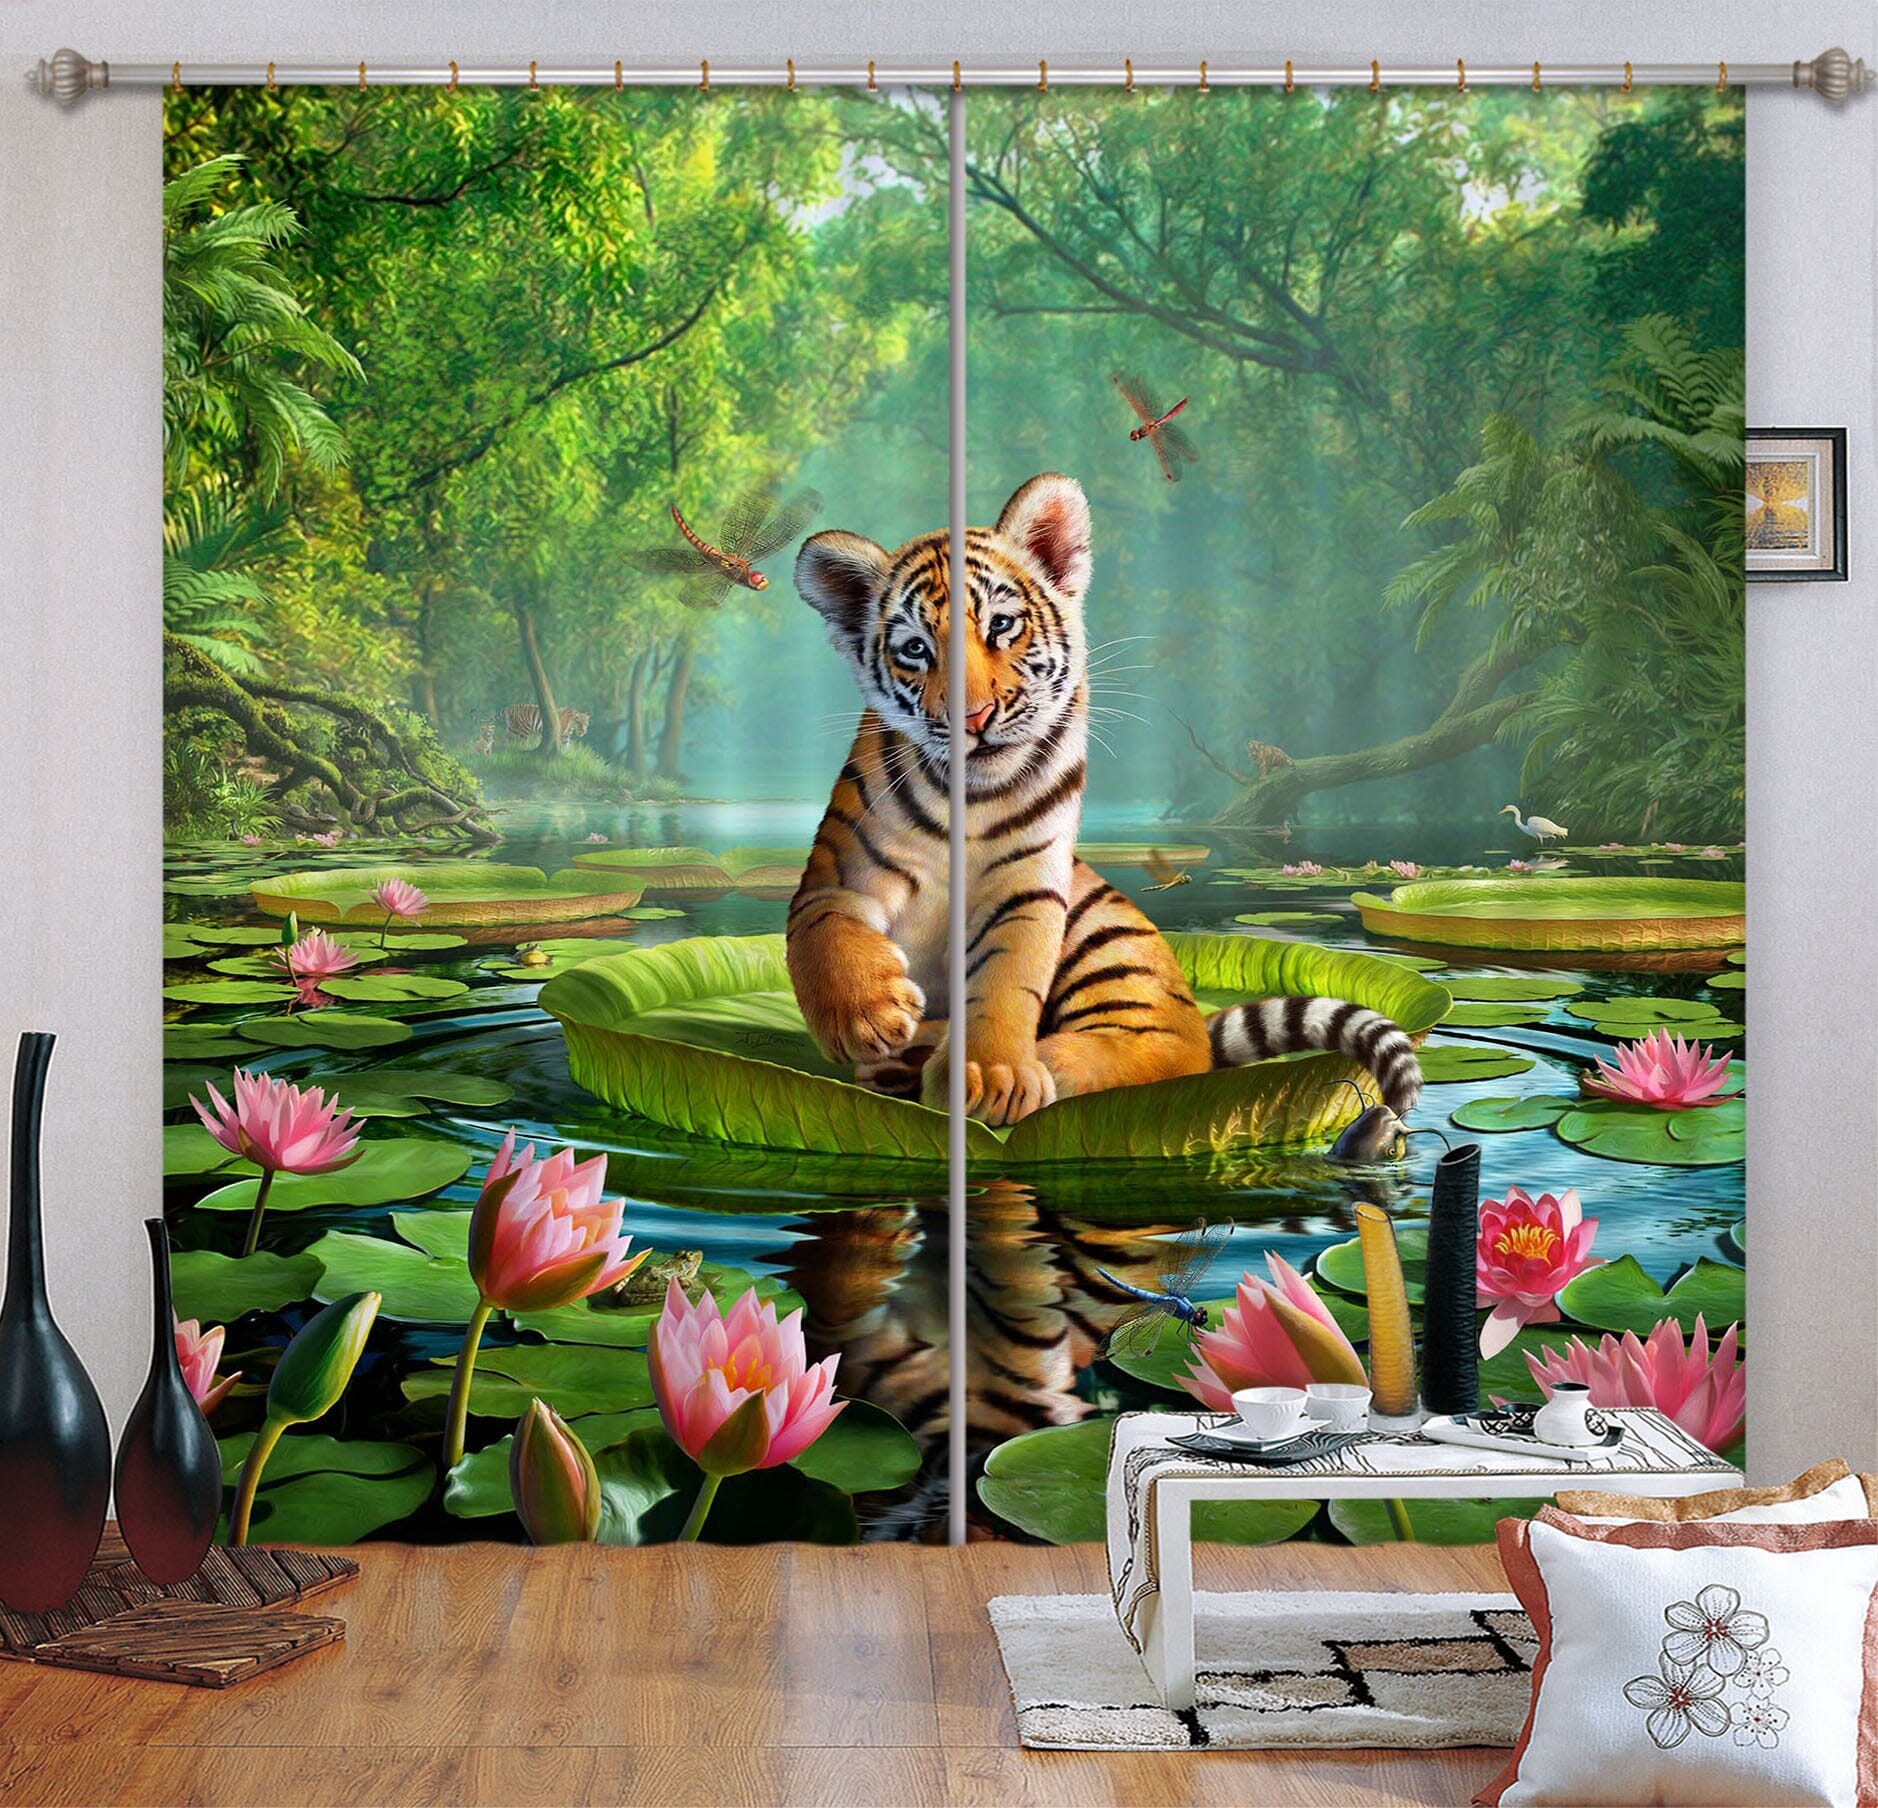 3D Tiger Lily 048 Jerry LoFaro Curtain Curtains Drapes Curtains AJ Creativity Home 